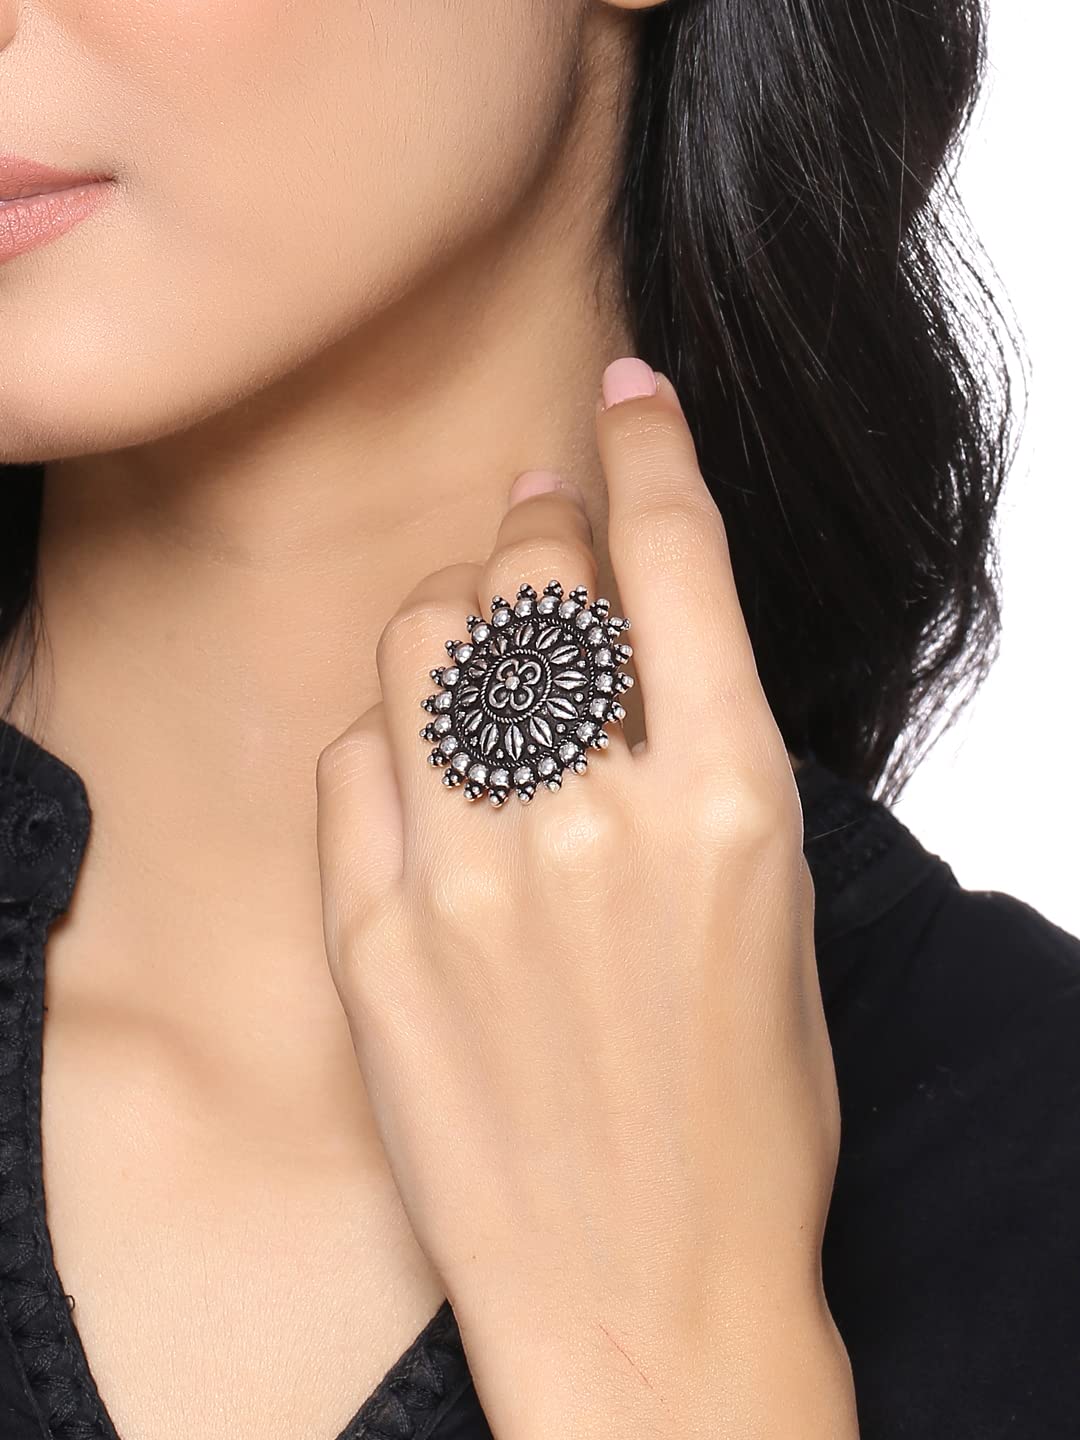 Jaipur's Handmade Silver Oxidised Chain Rings Based On Trible Design For  Women